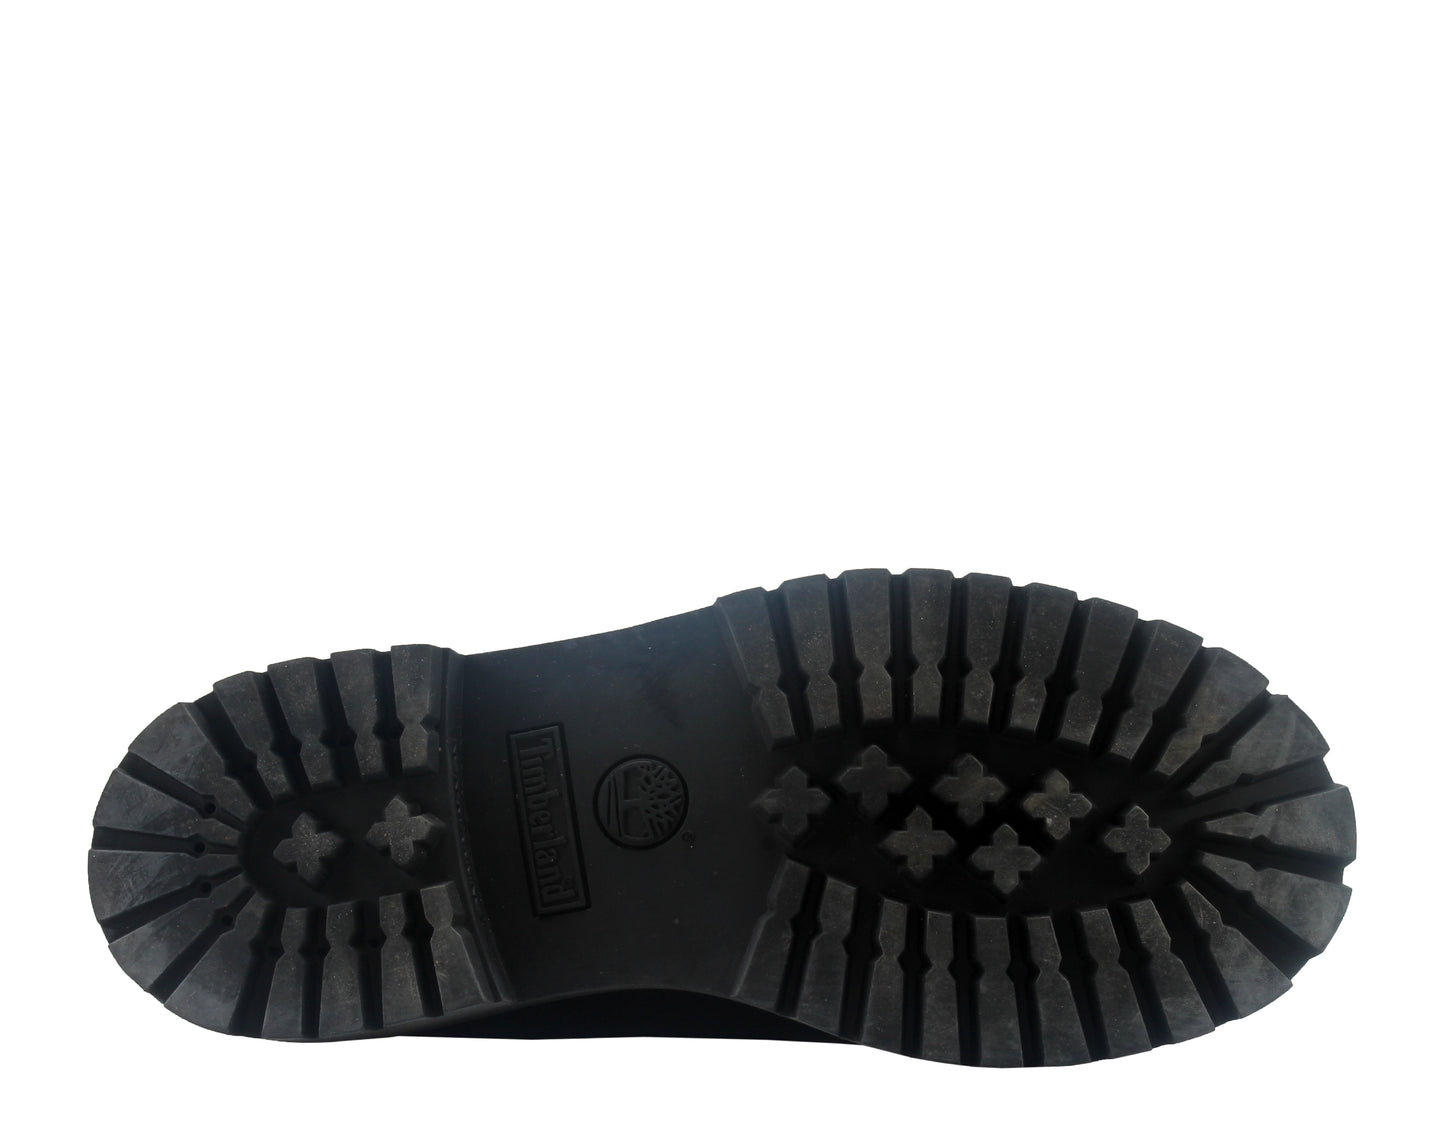 Timberland 6-Inch Premium Waterproof Black Nubuck Junior Big Kids Boots 12907